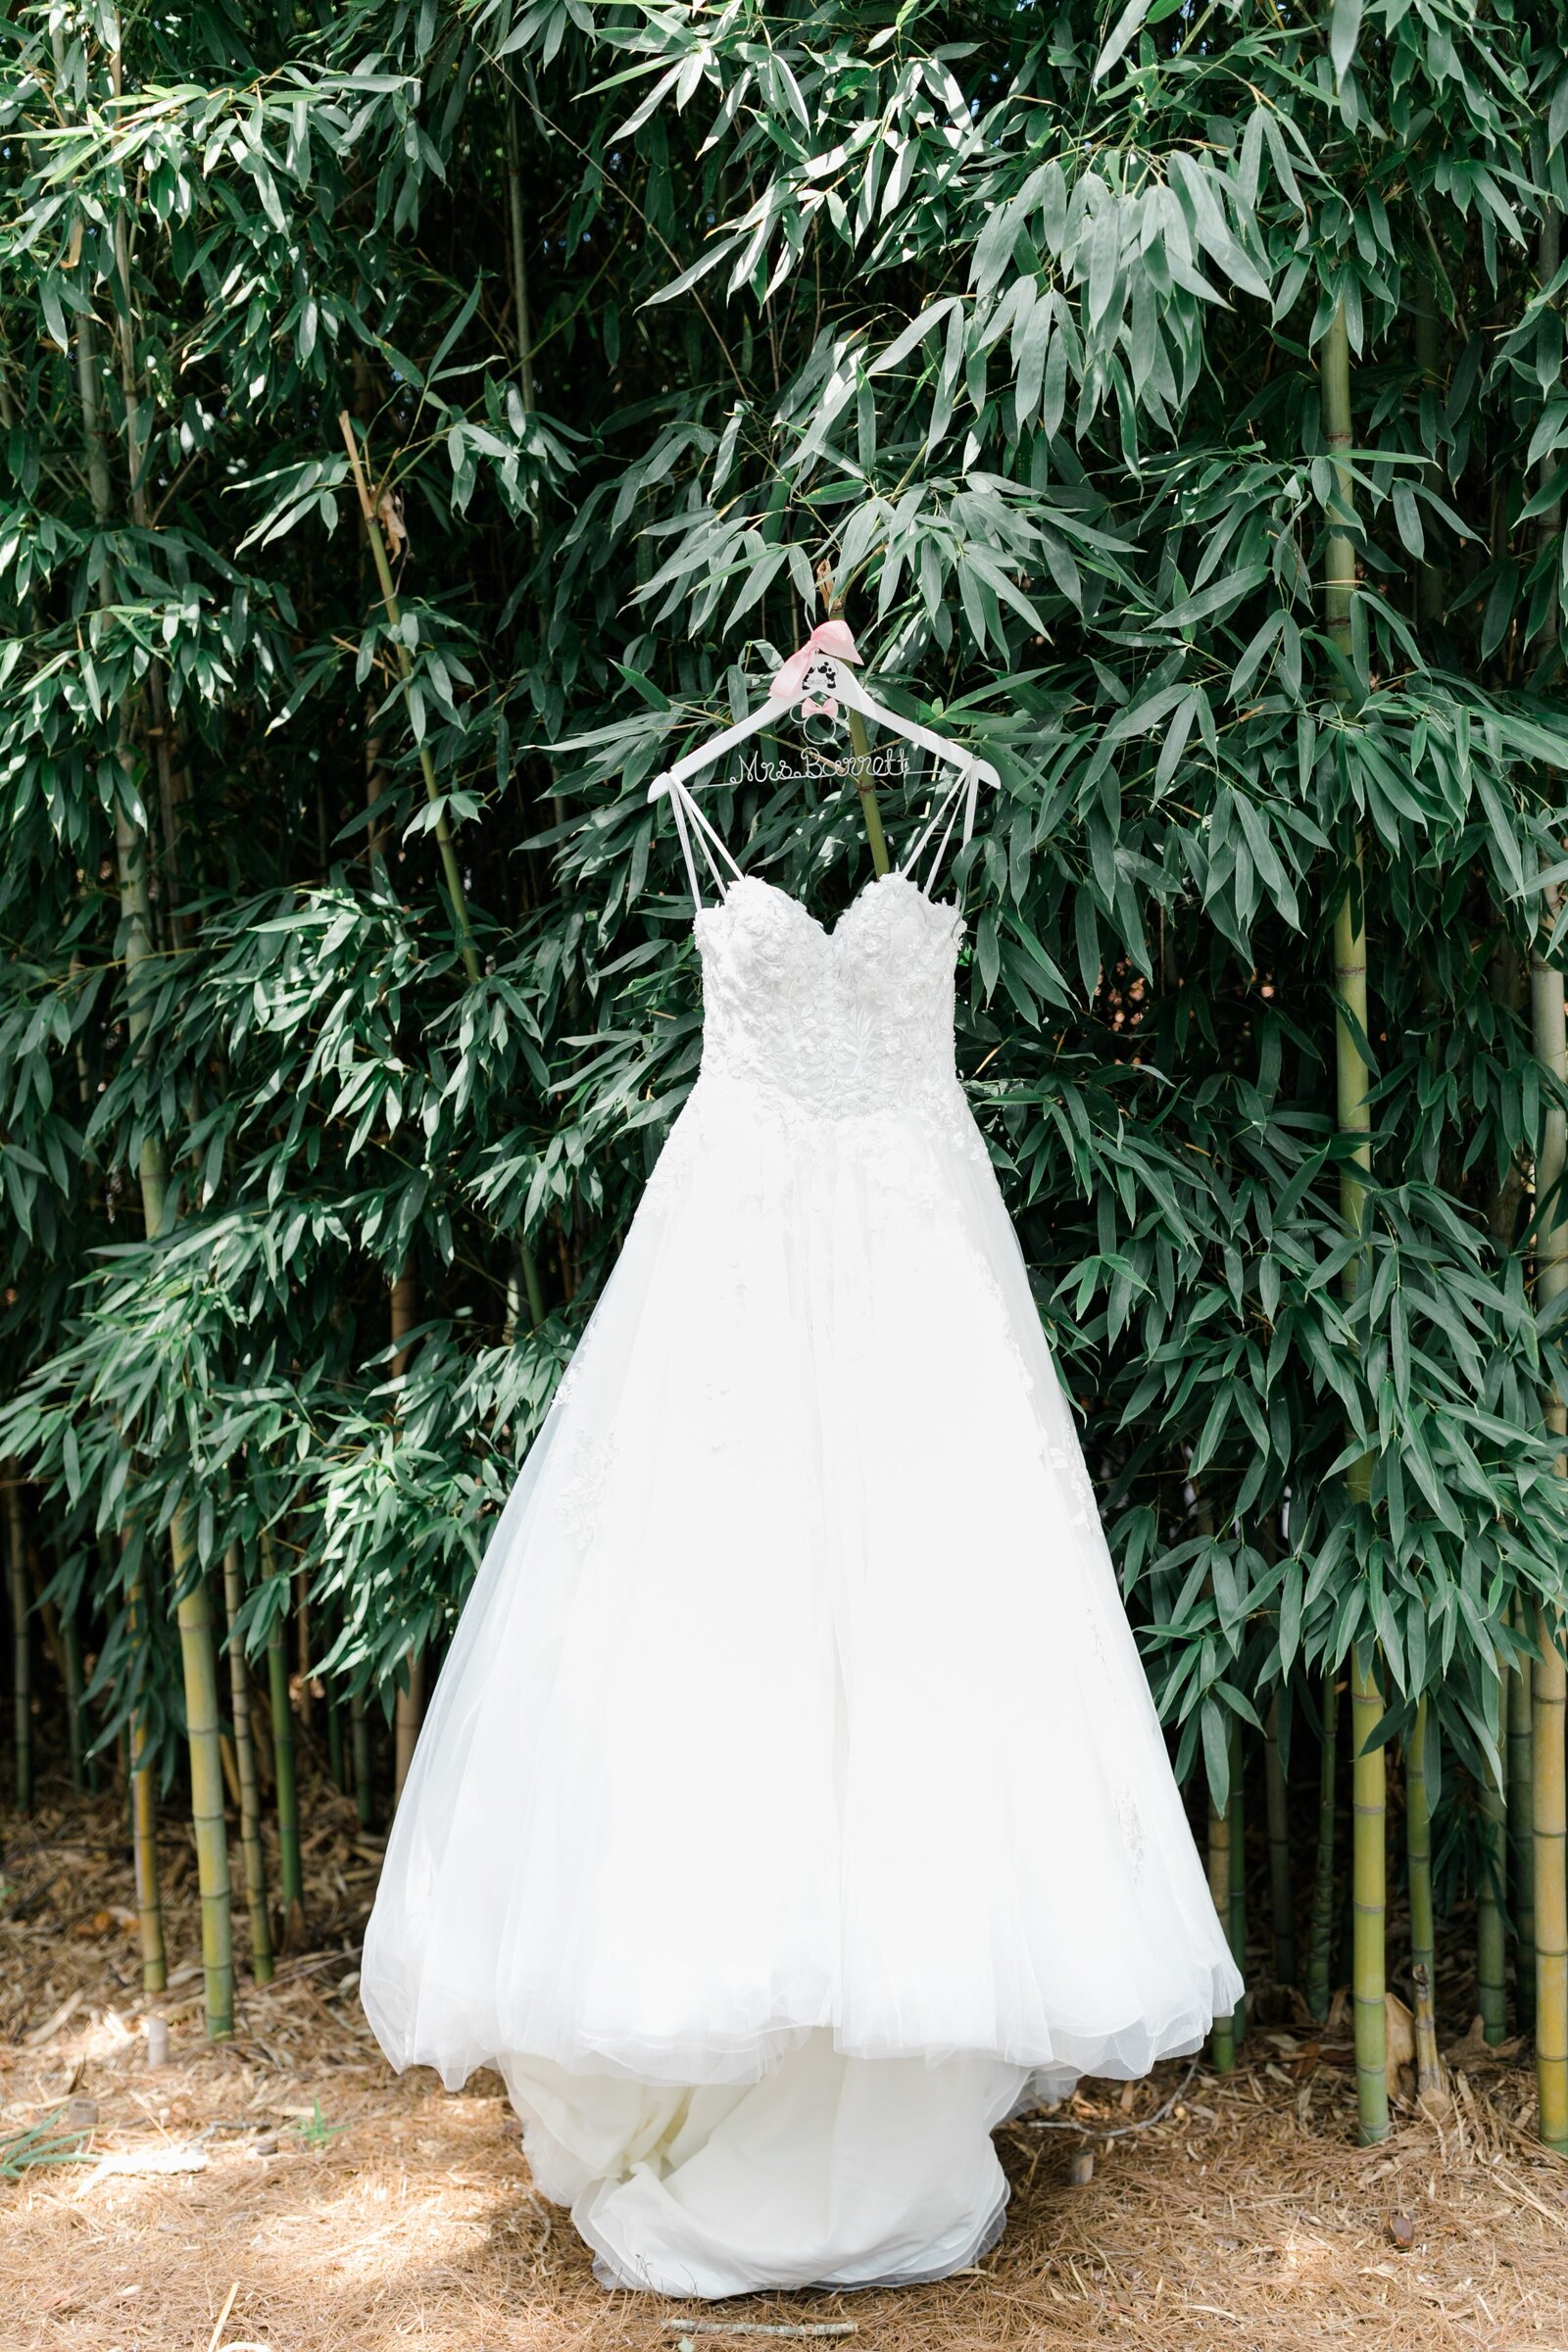 erica-lauren-photography-turnbull-barrett-primrose-cottage-wedding-getting-ready-aug-02-2020-72